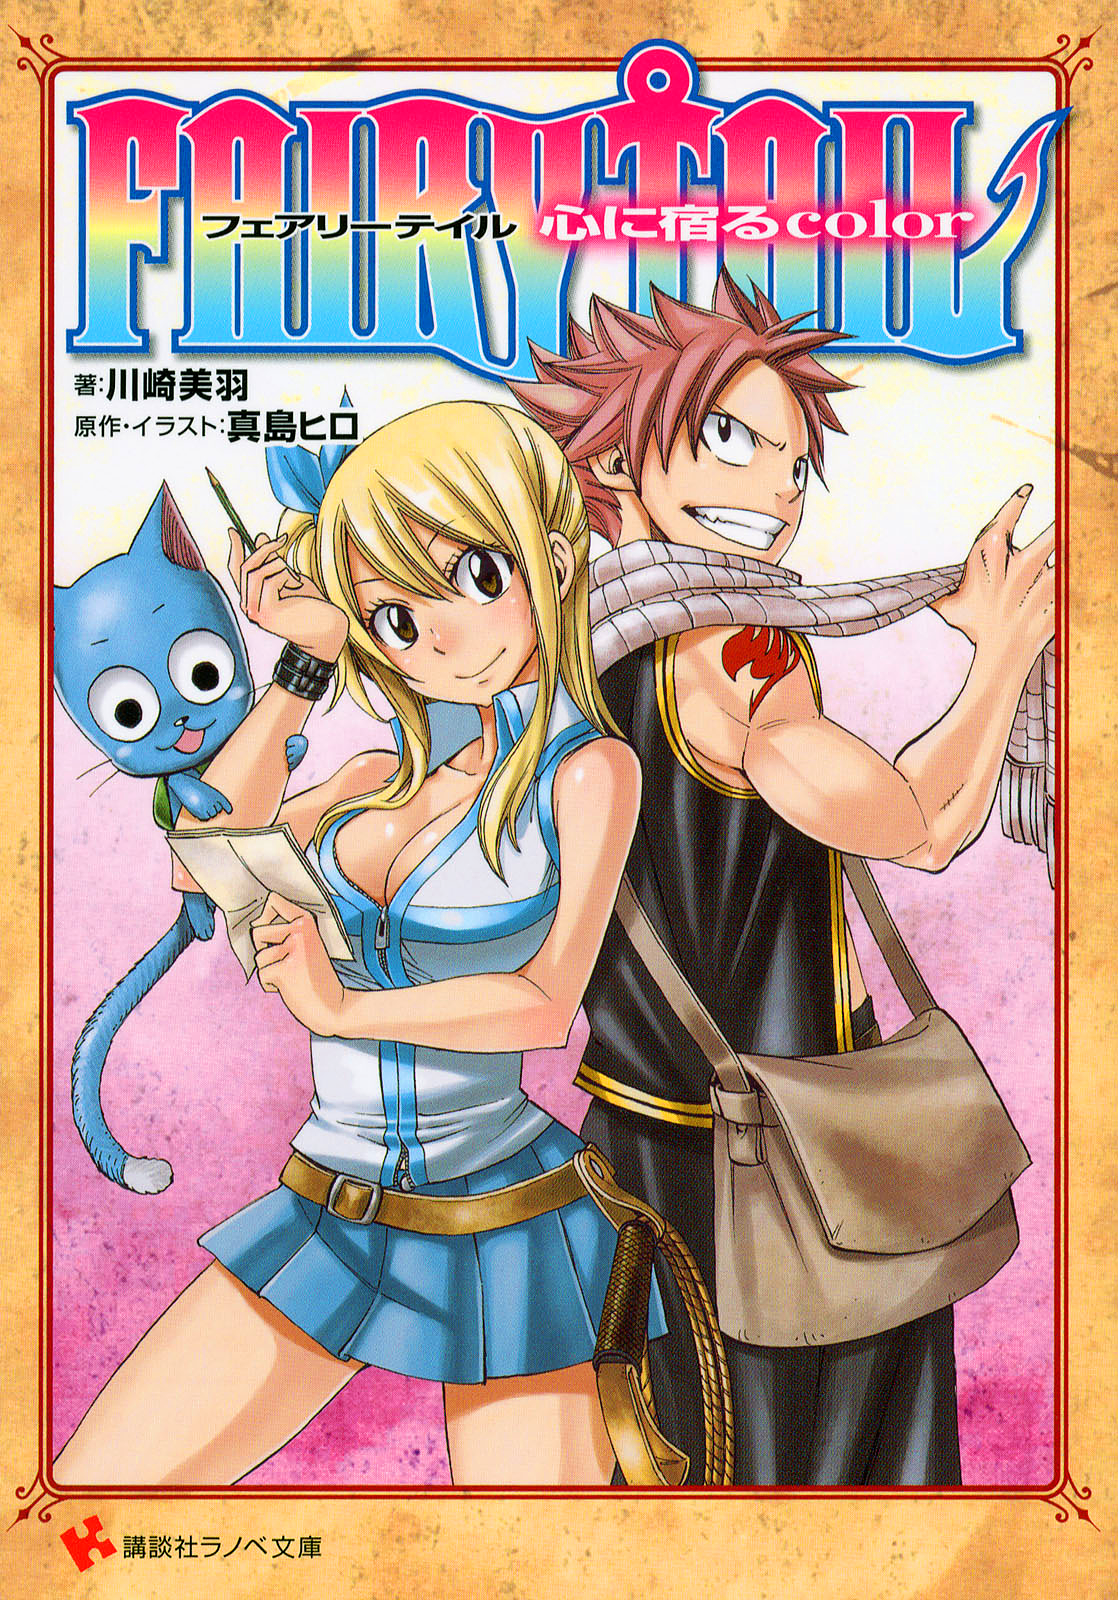 Fairy Tail Series  Fairy Tail Wiki  Fandom